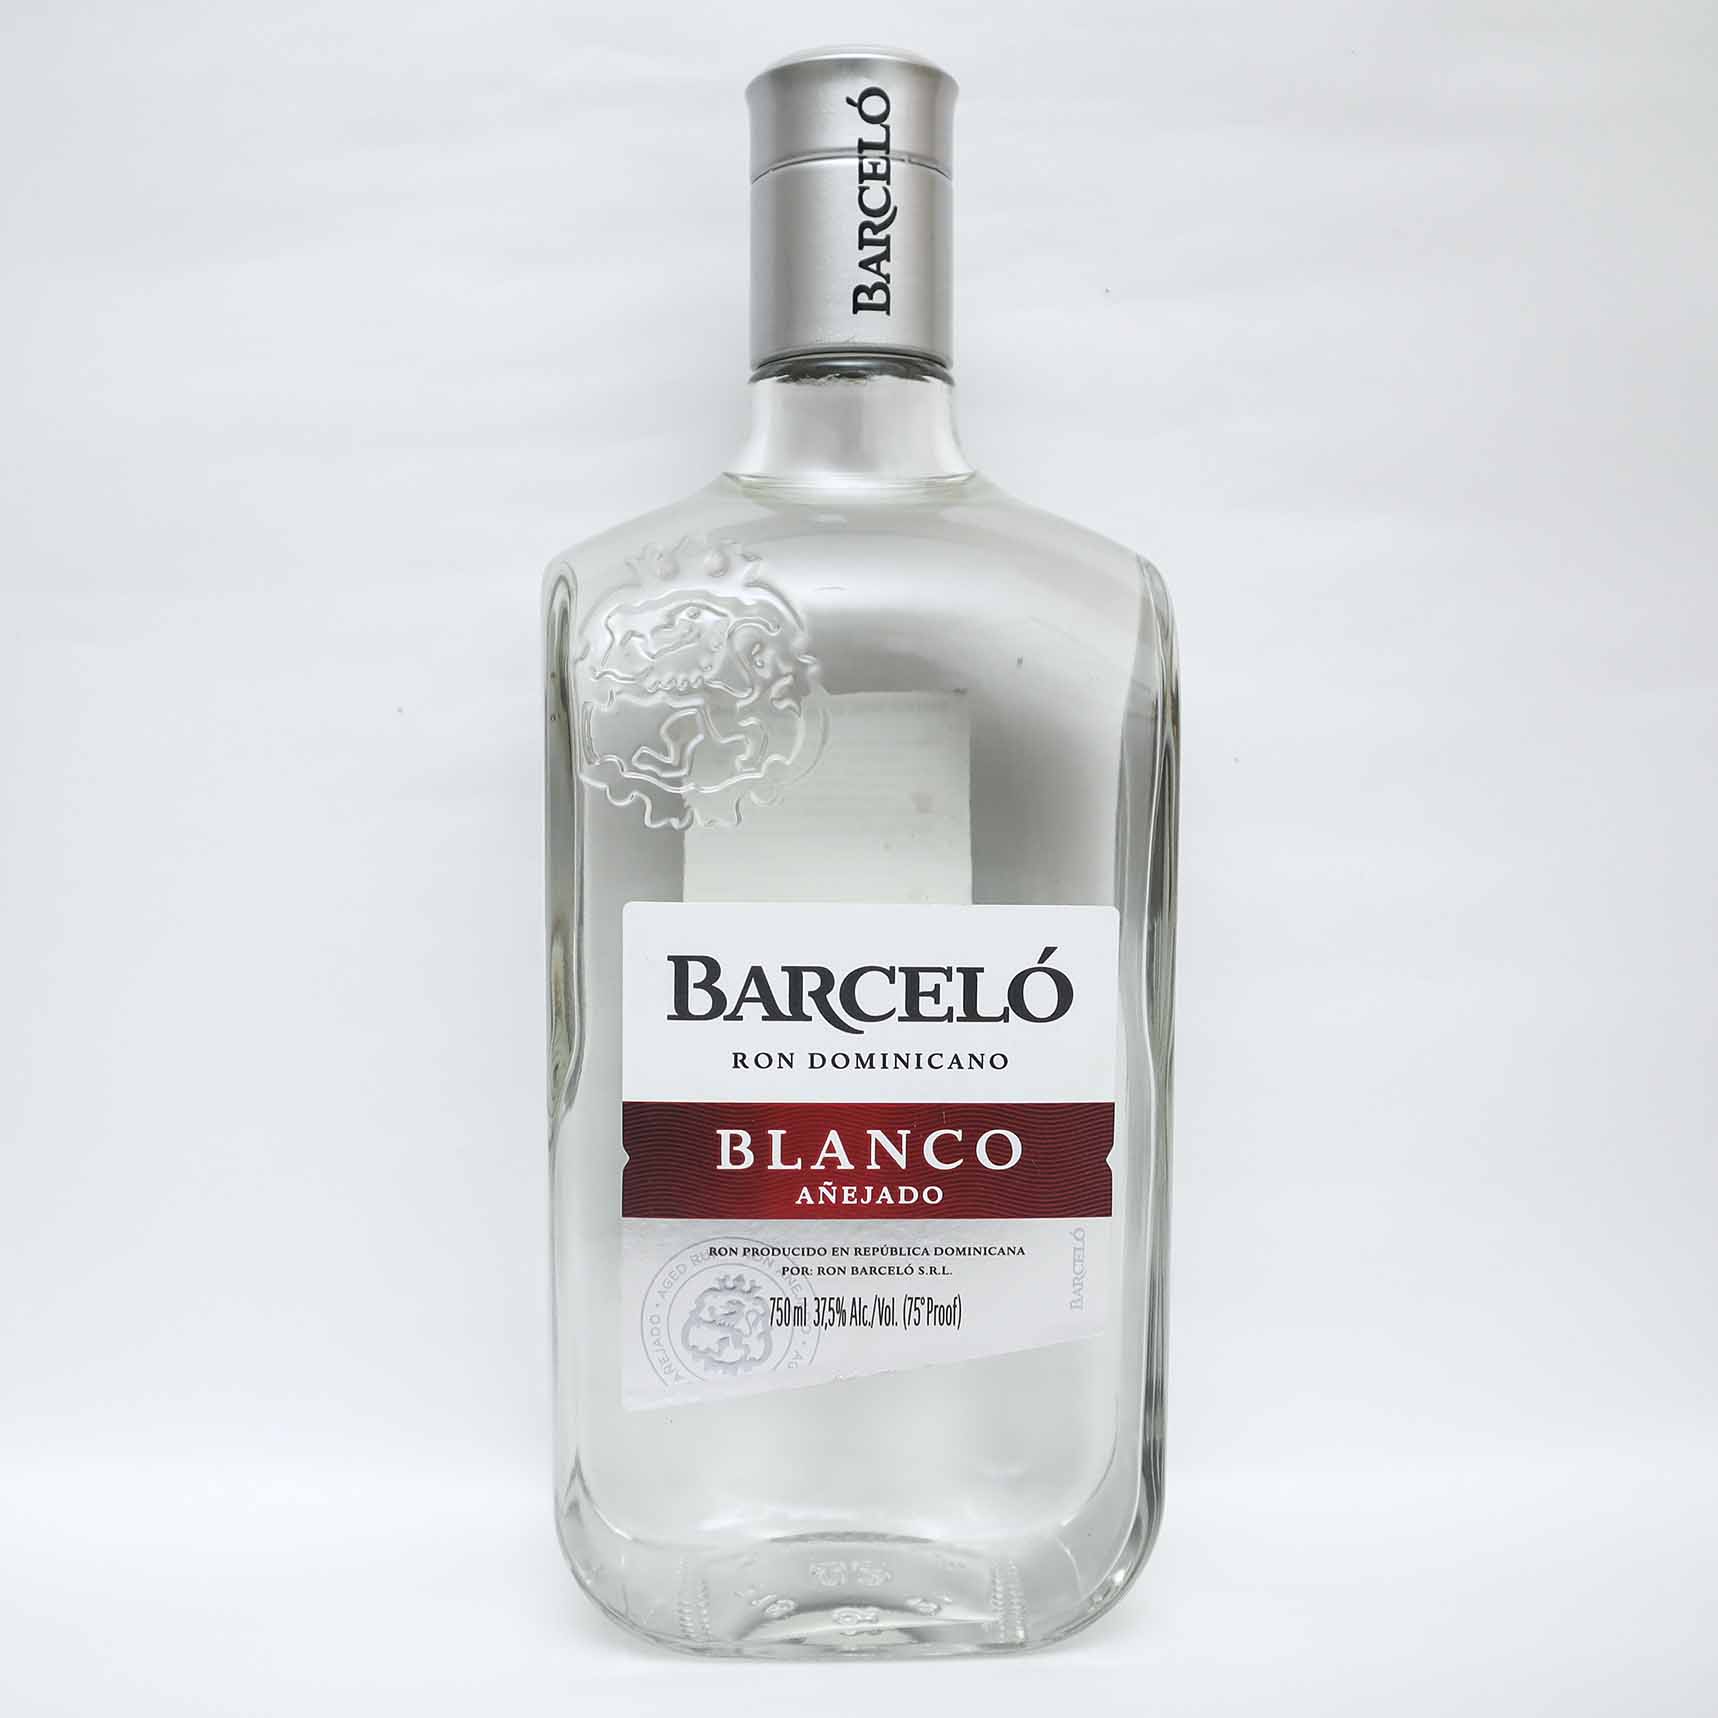 Barcelo Ron Dominicano Blanco Anejado Rum 750ml